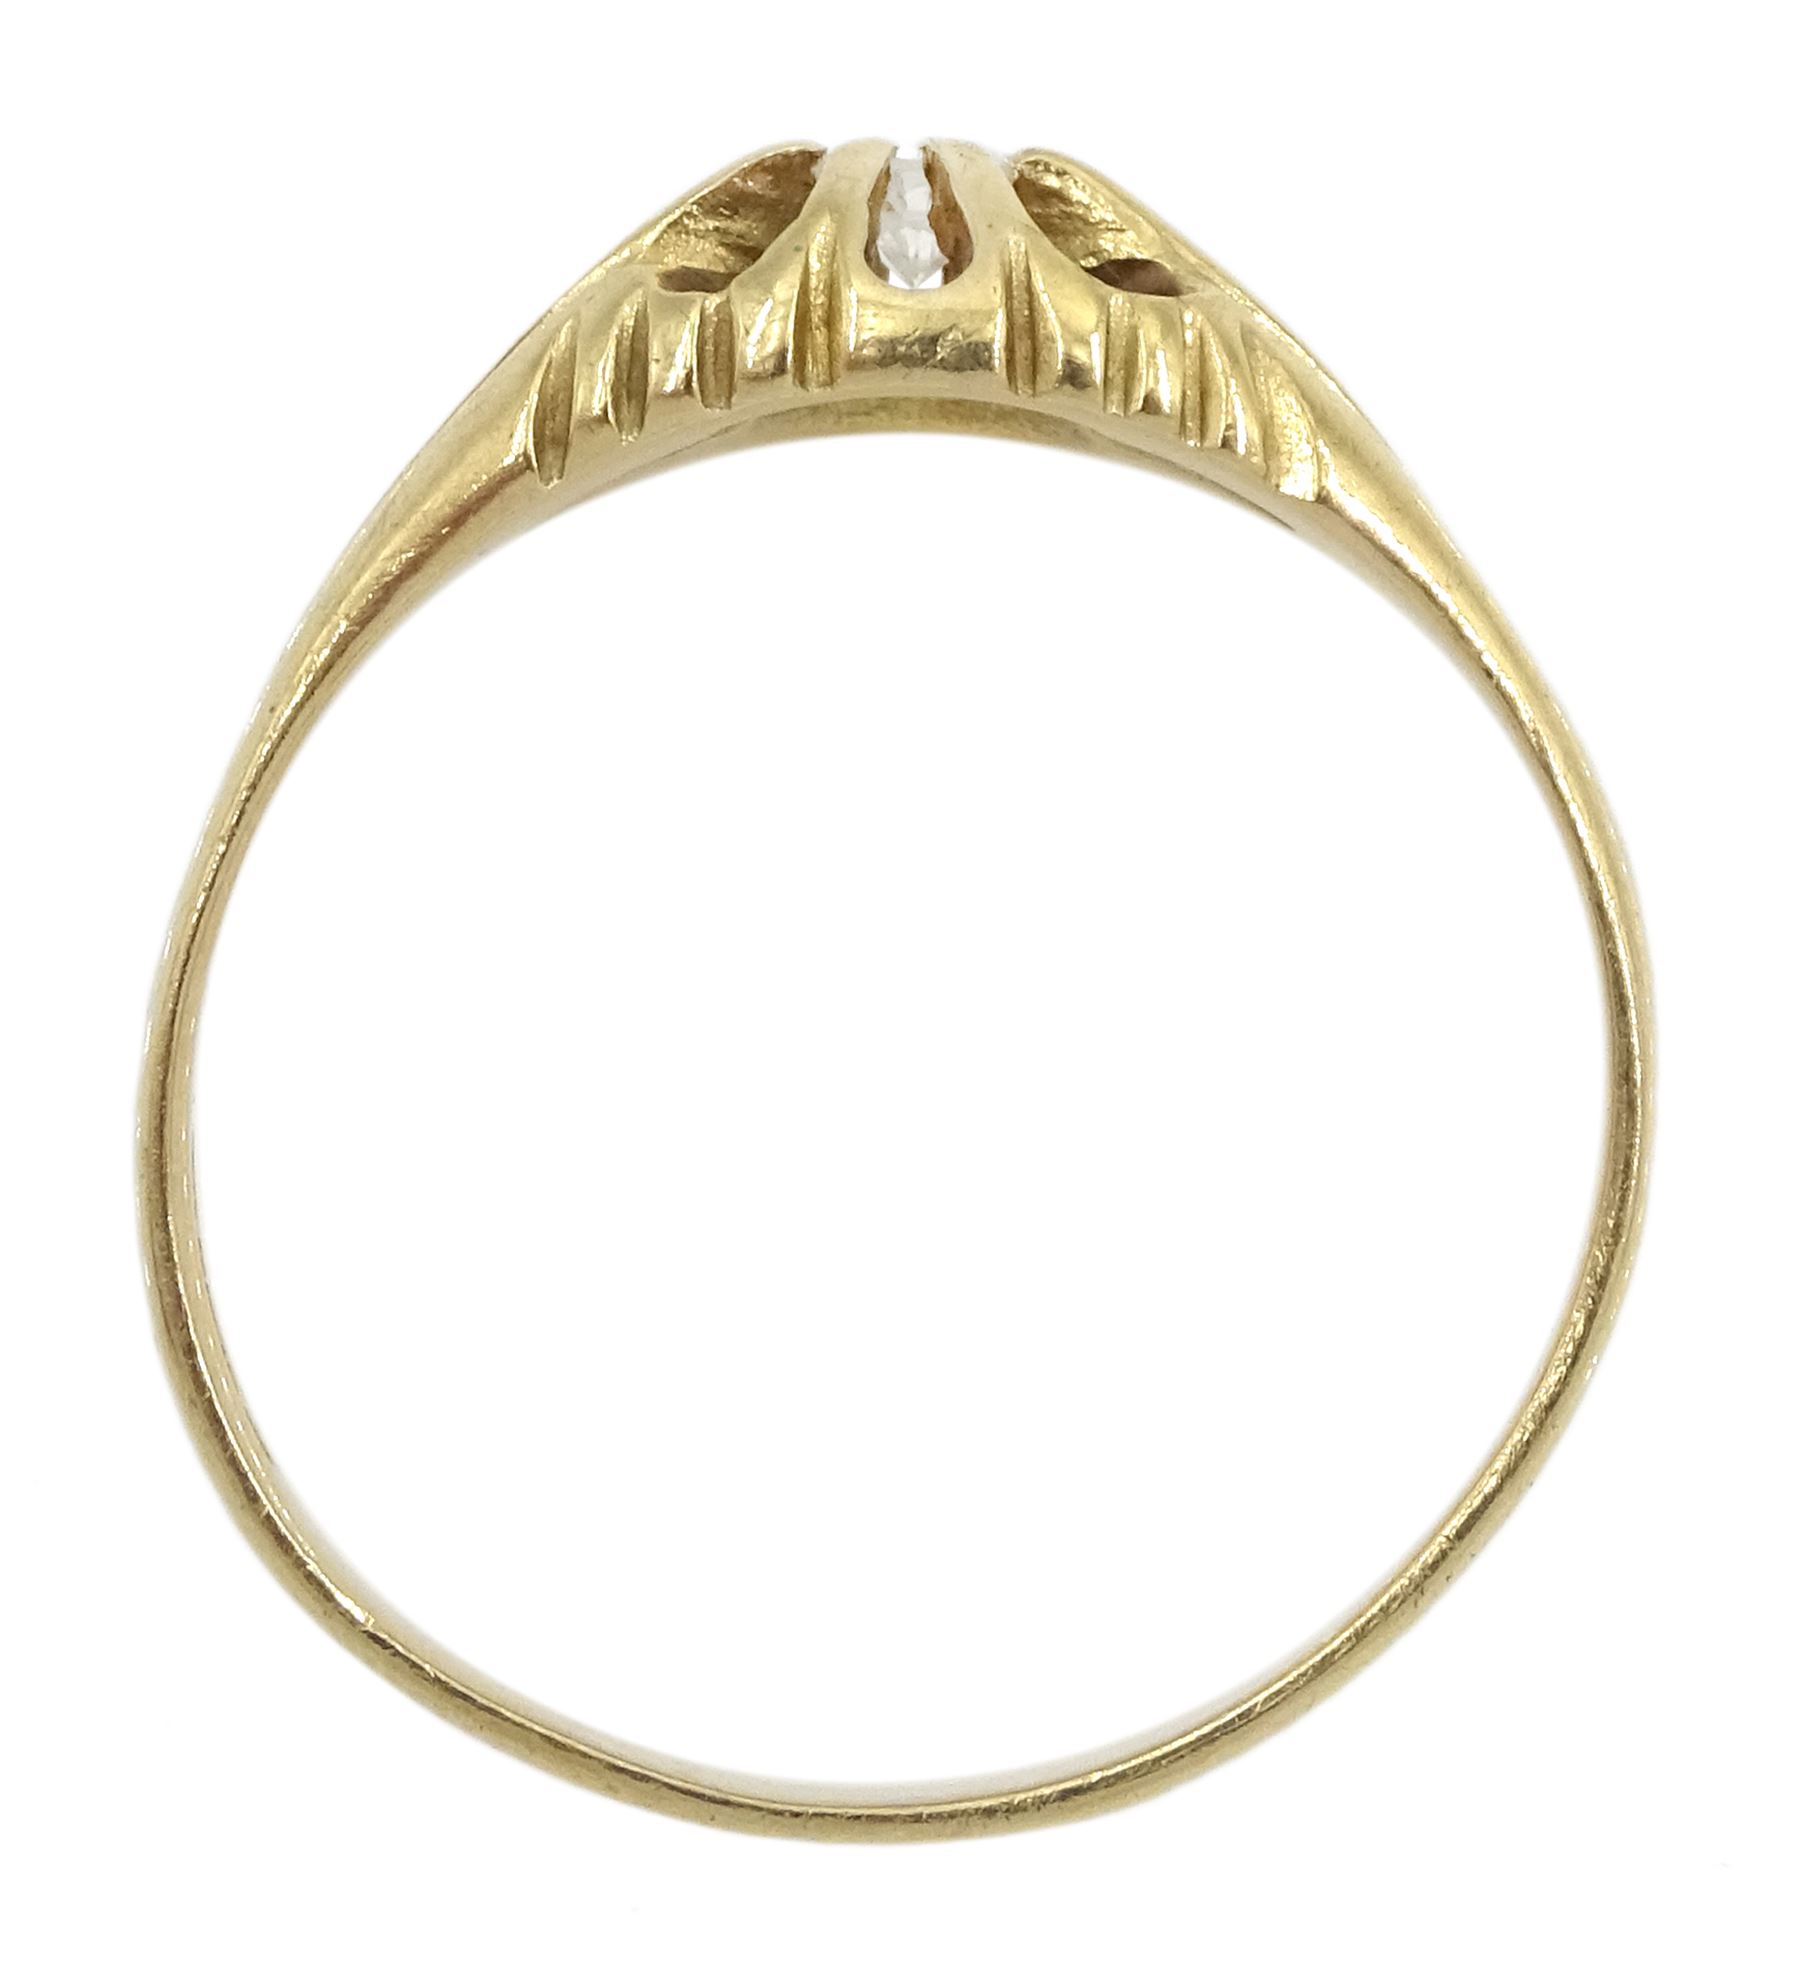 9ct gold single stone diamond ring - Image 4 of 4